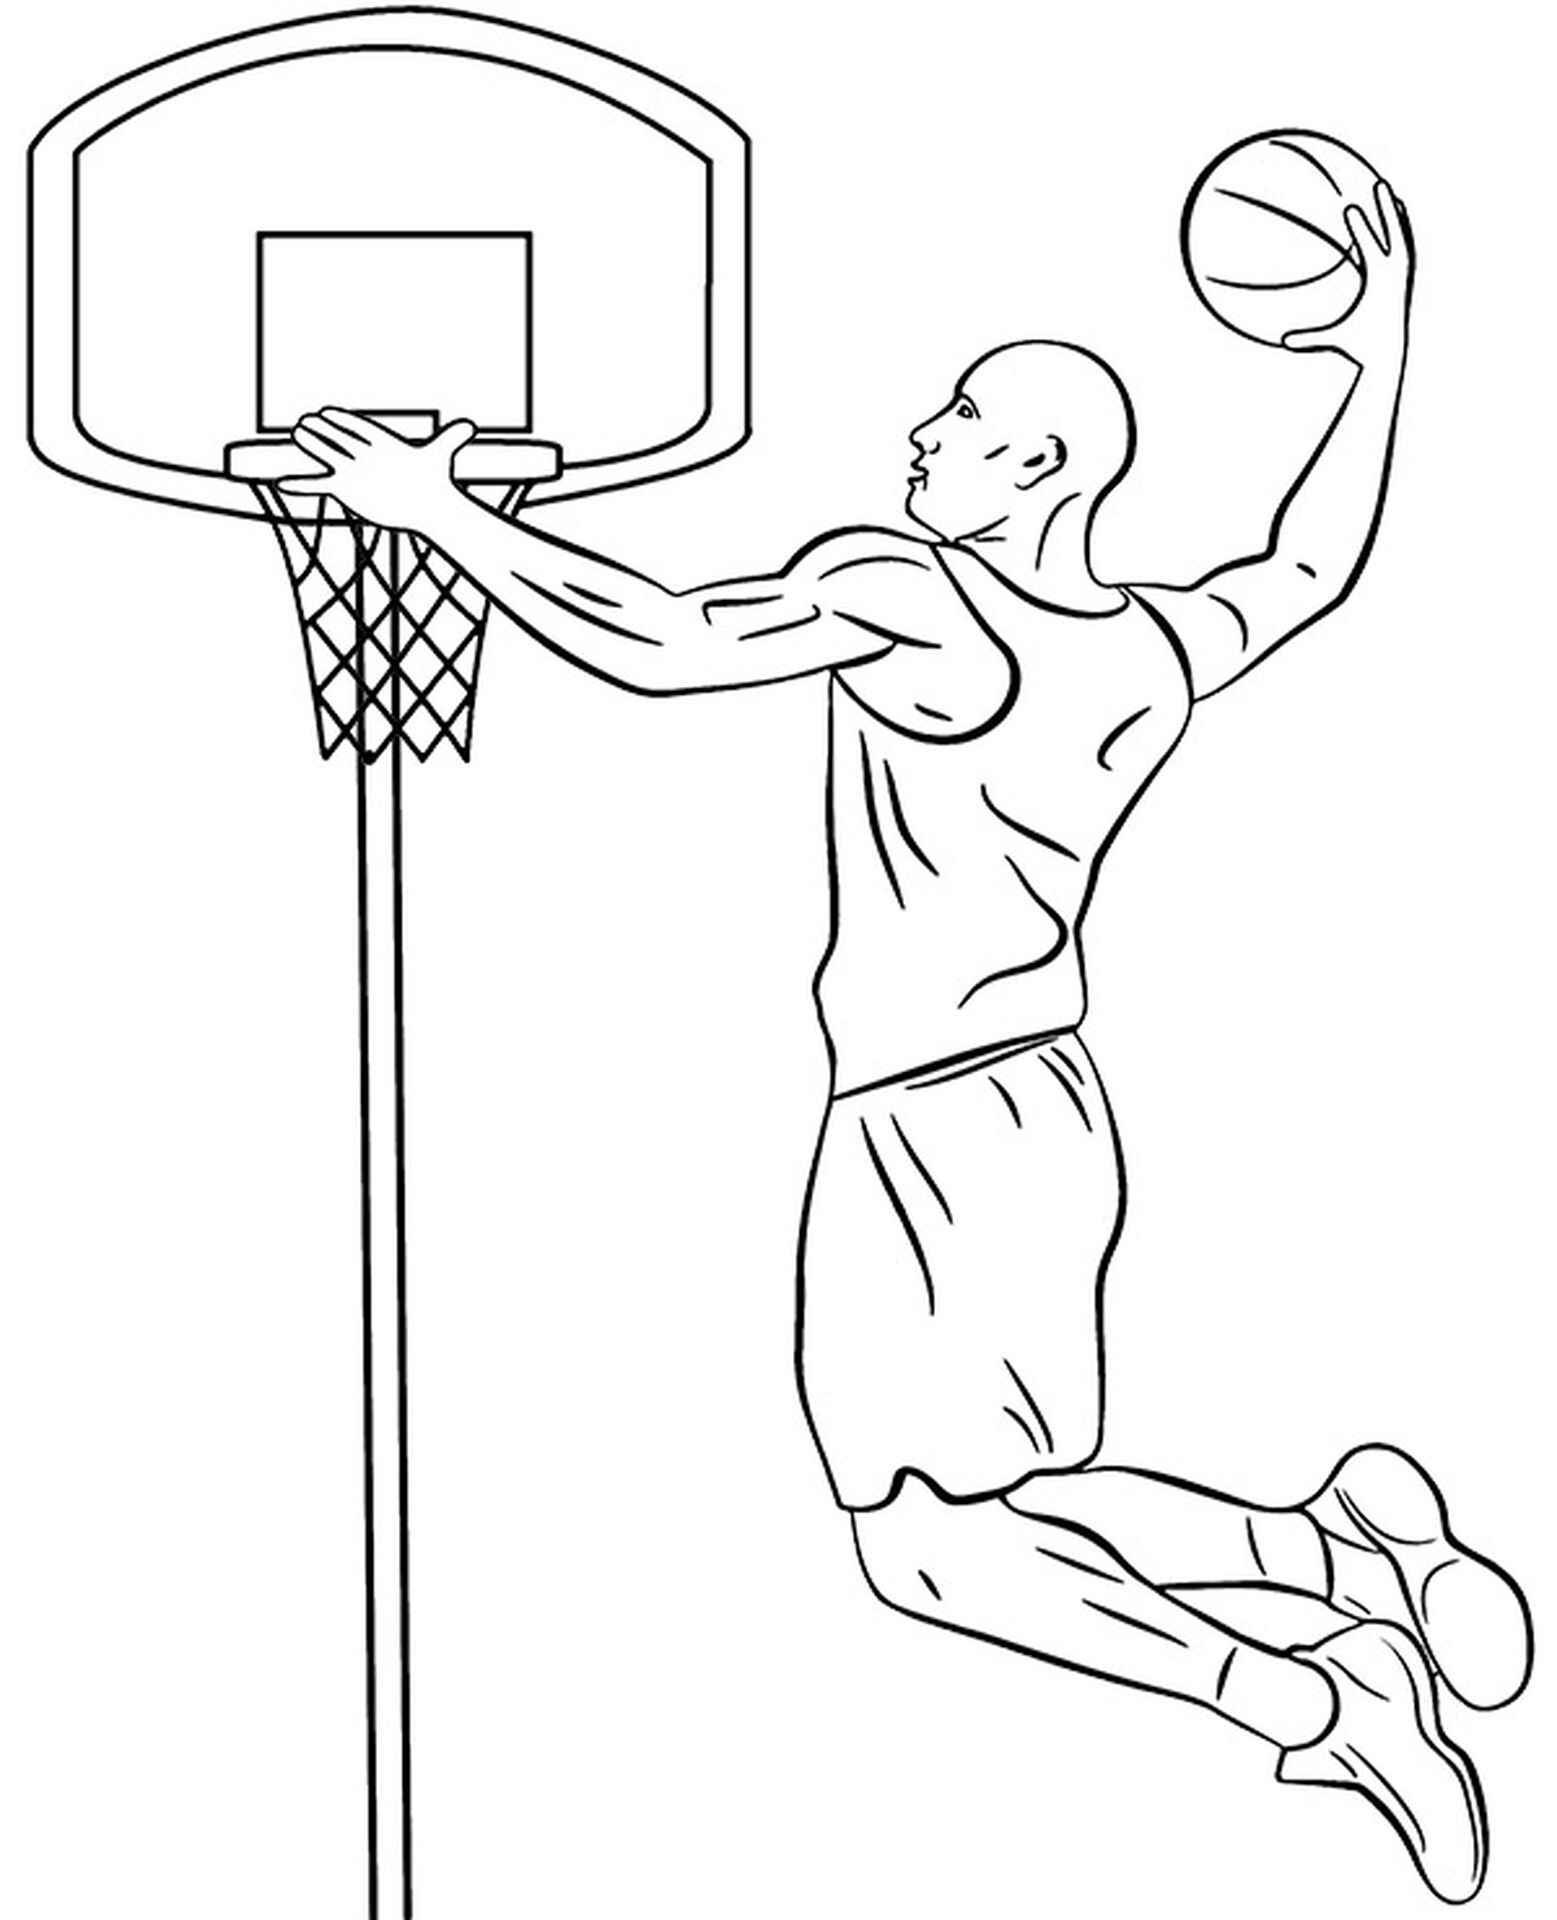 Раскраска баскетболист